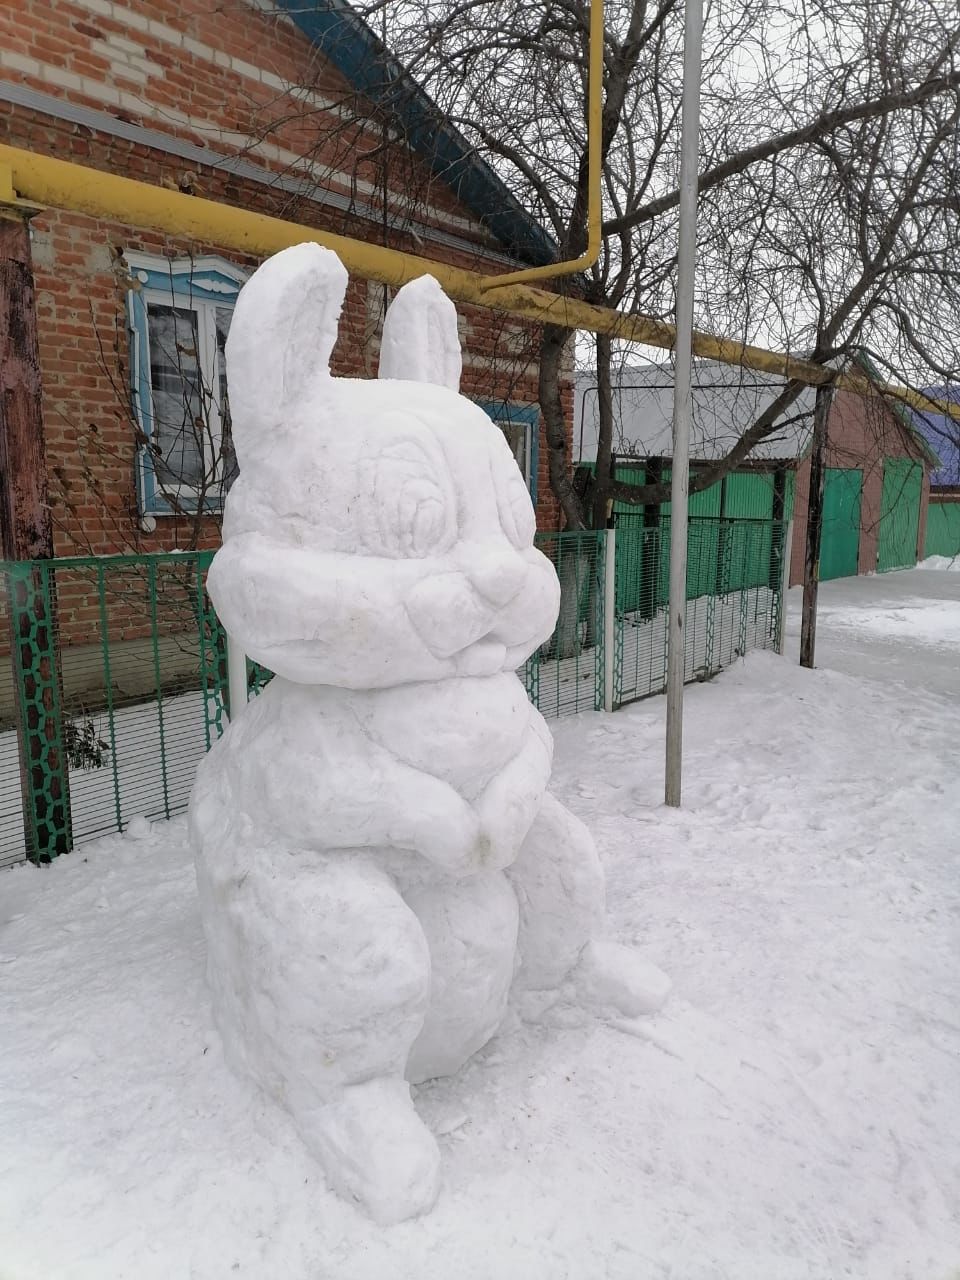 Заяц на зайца из снега